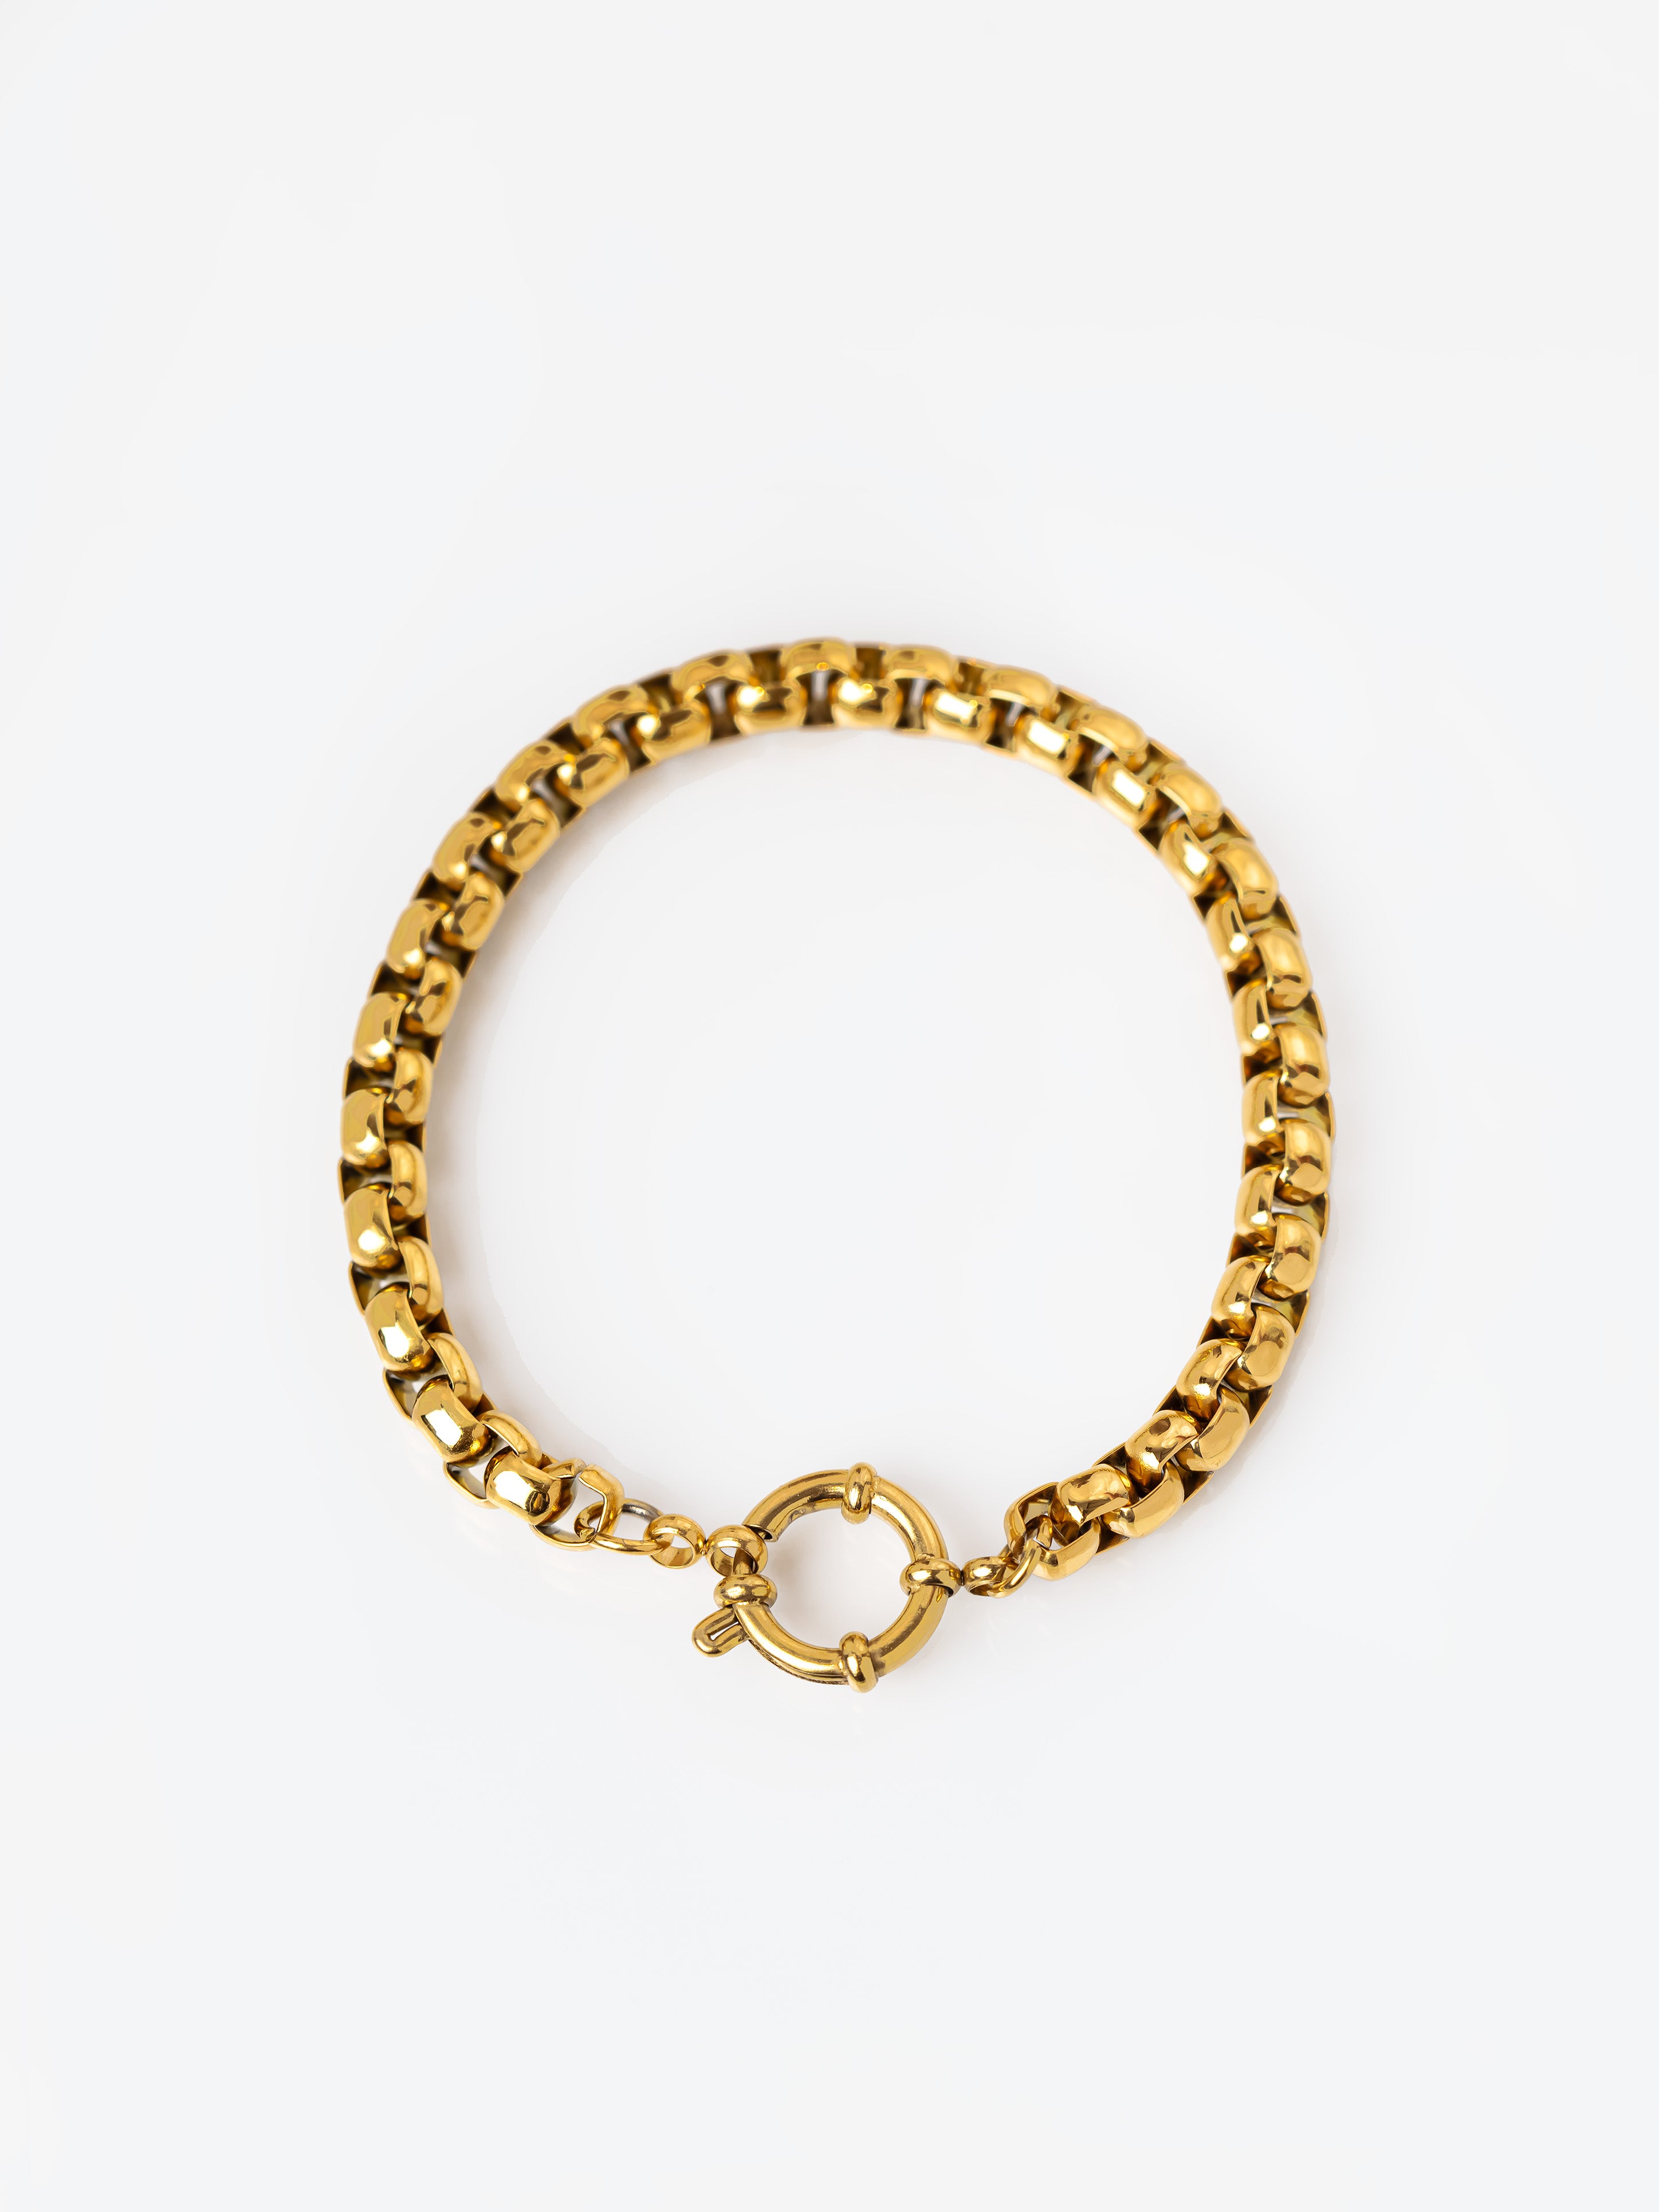 Gold Belcher Box Chain Bracelet For Charms